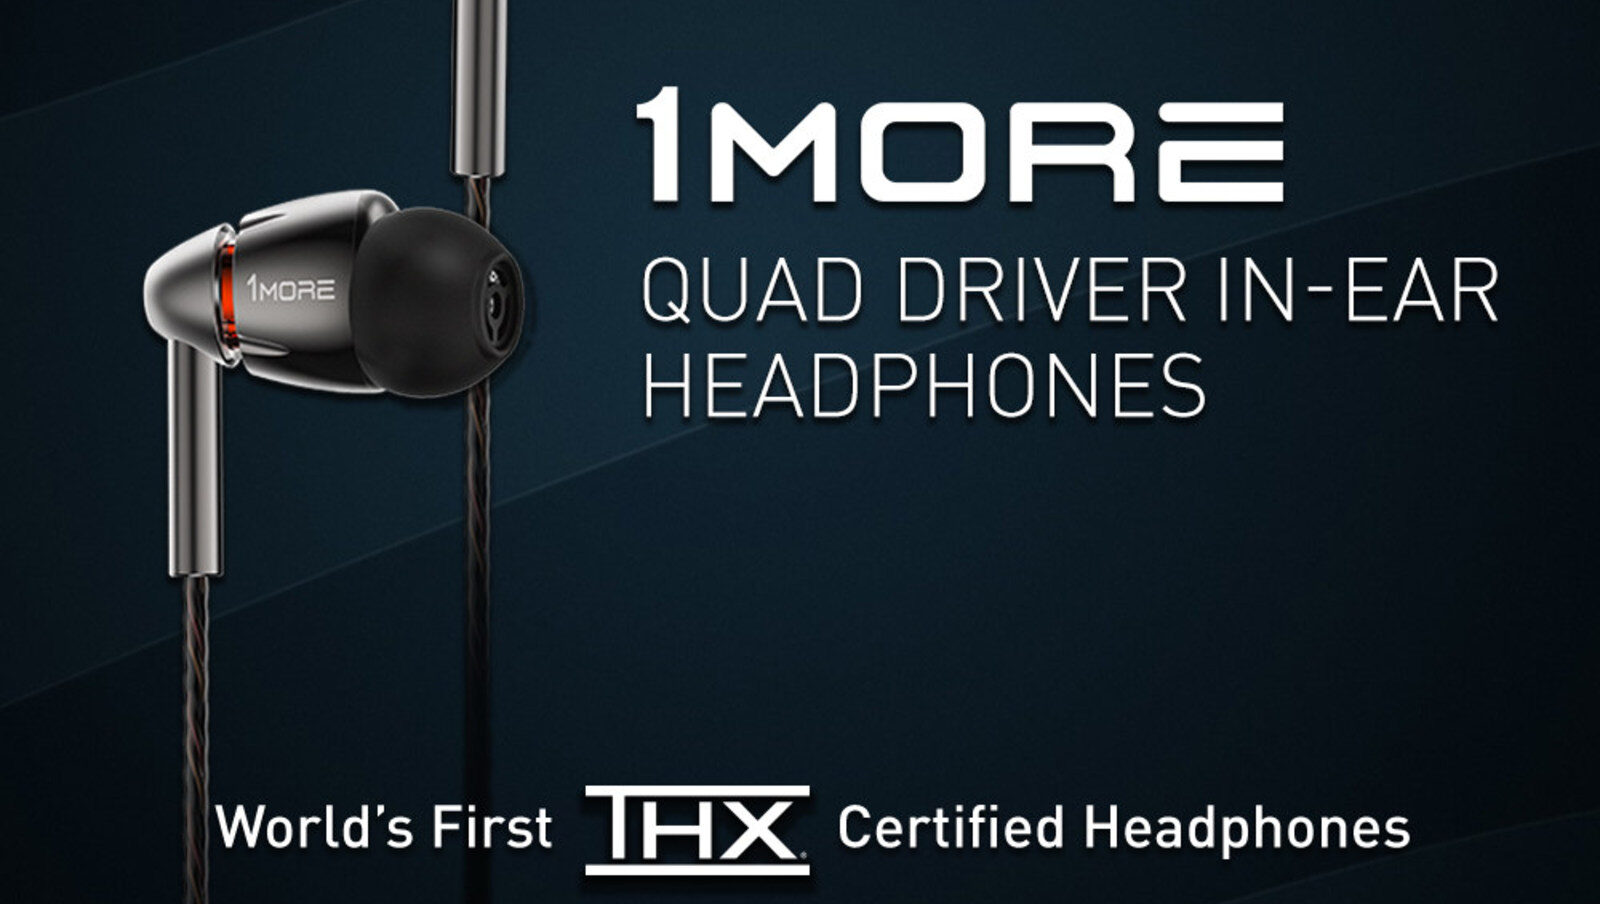 1MORE Quad Driver In-Ear Headphones